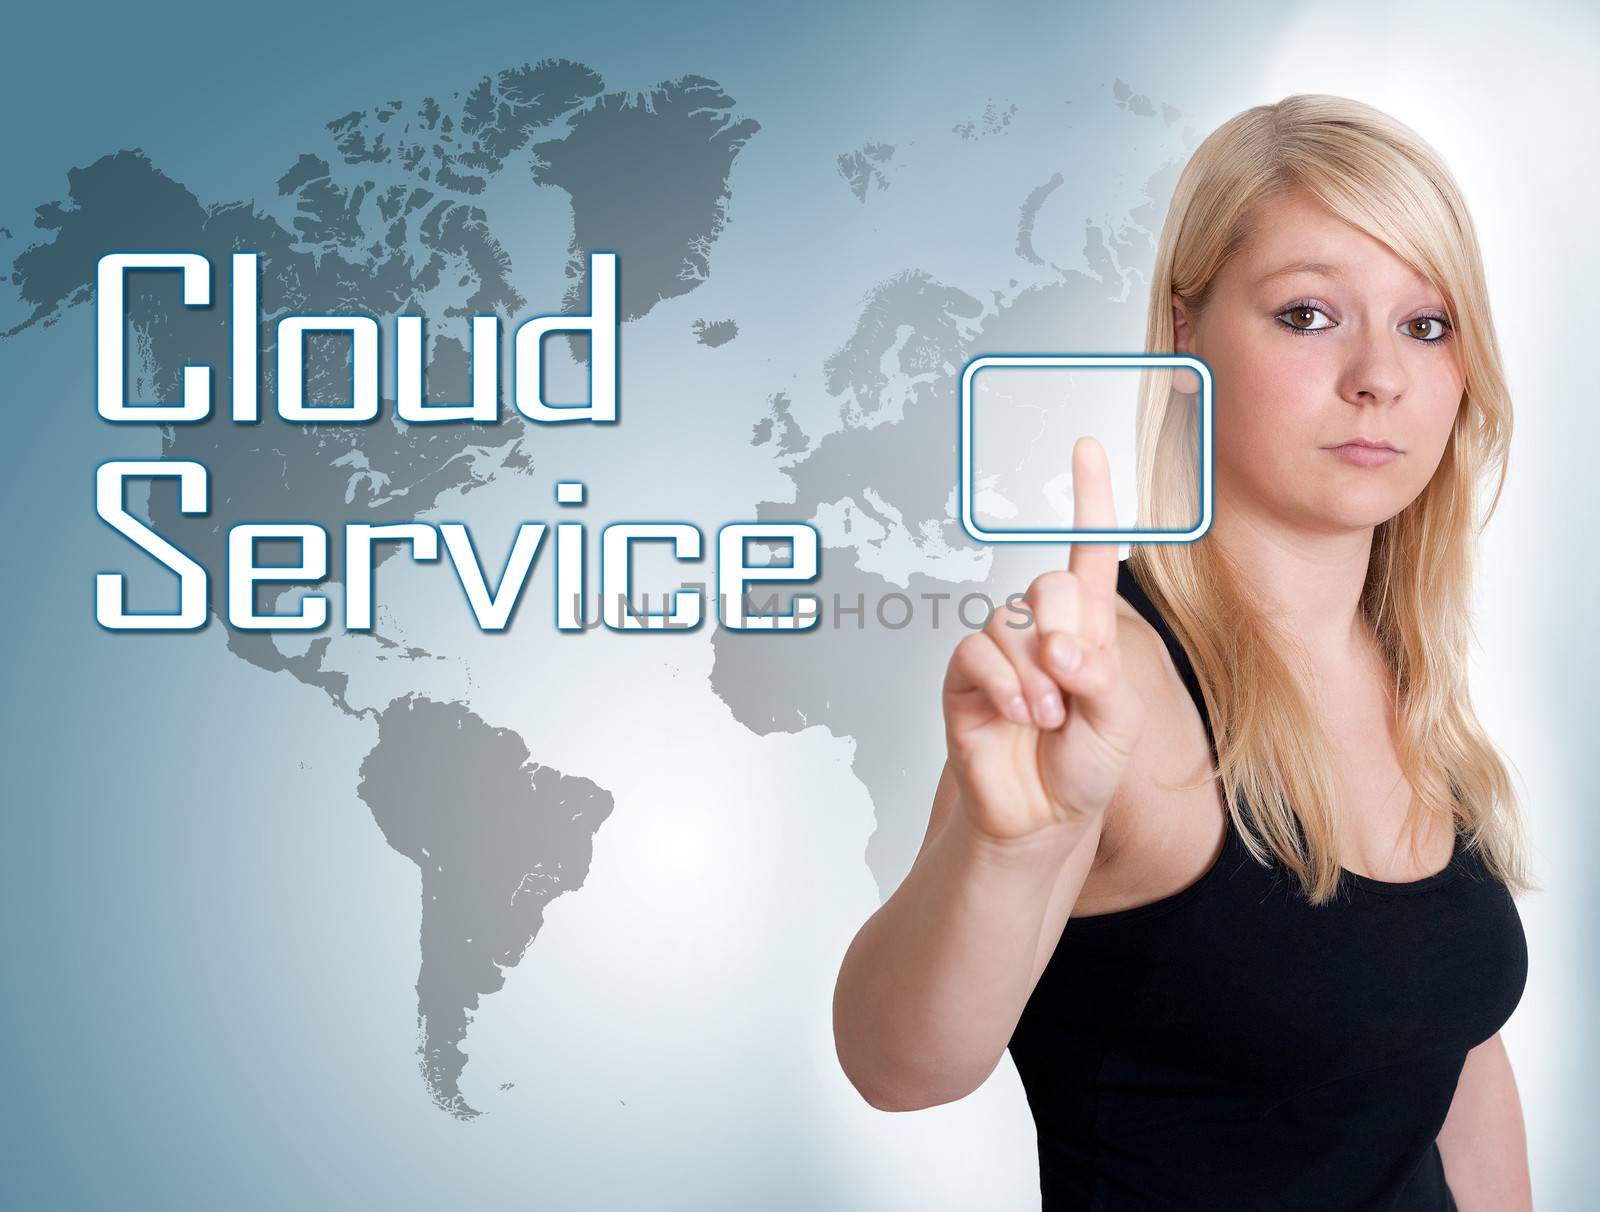 Cloud Service by Mazirama